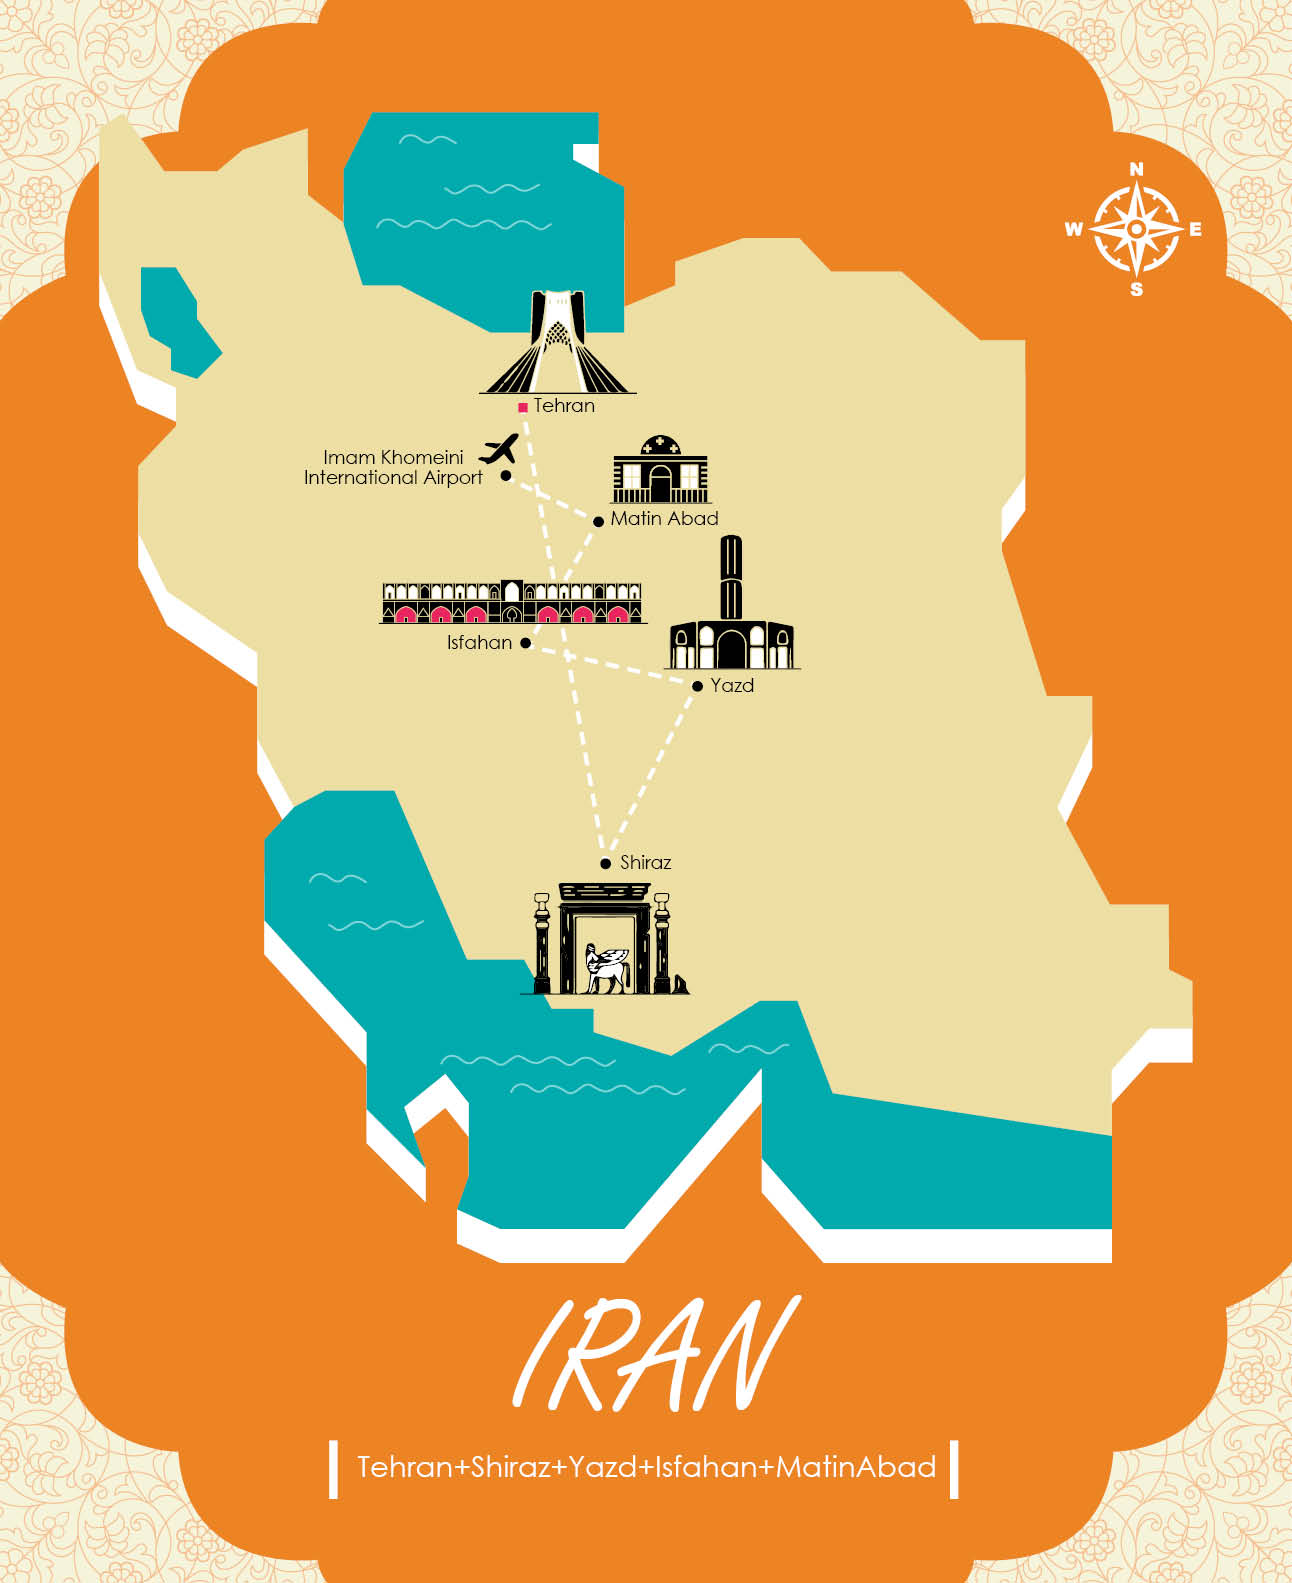 Tour of Iran: Tehran, Shiraz, Yazd, Isfahan (9 days)